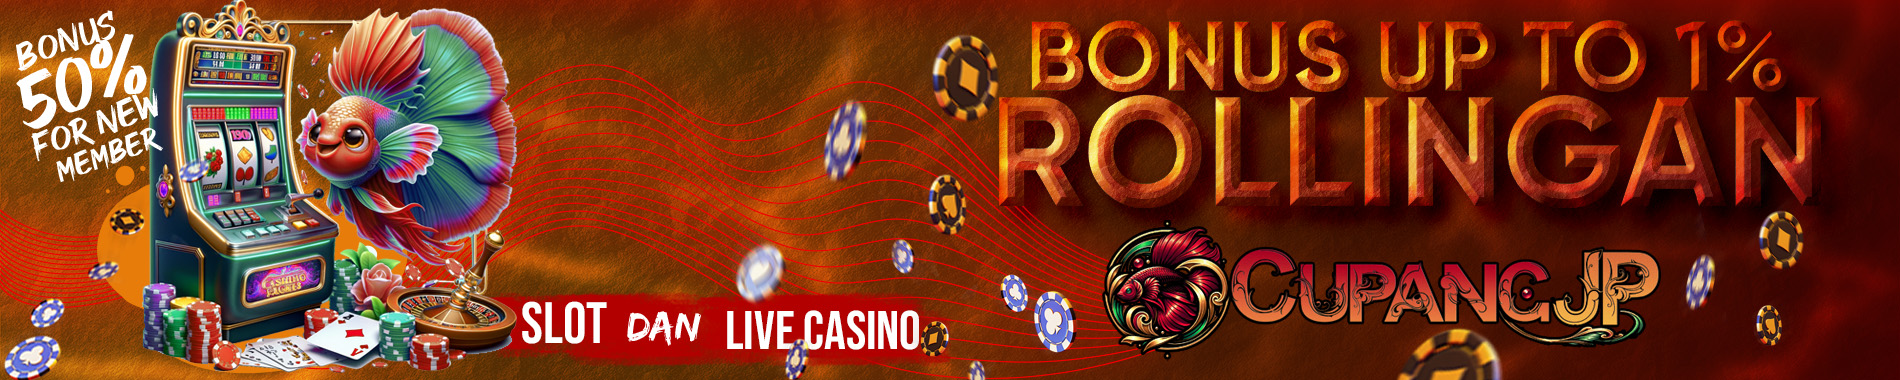 slot dan live casino bonus rollingan besar cupangjp